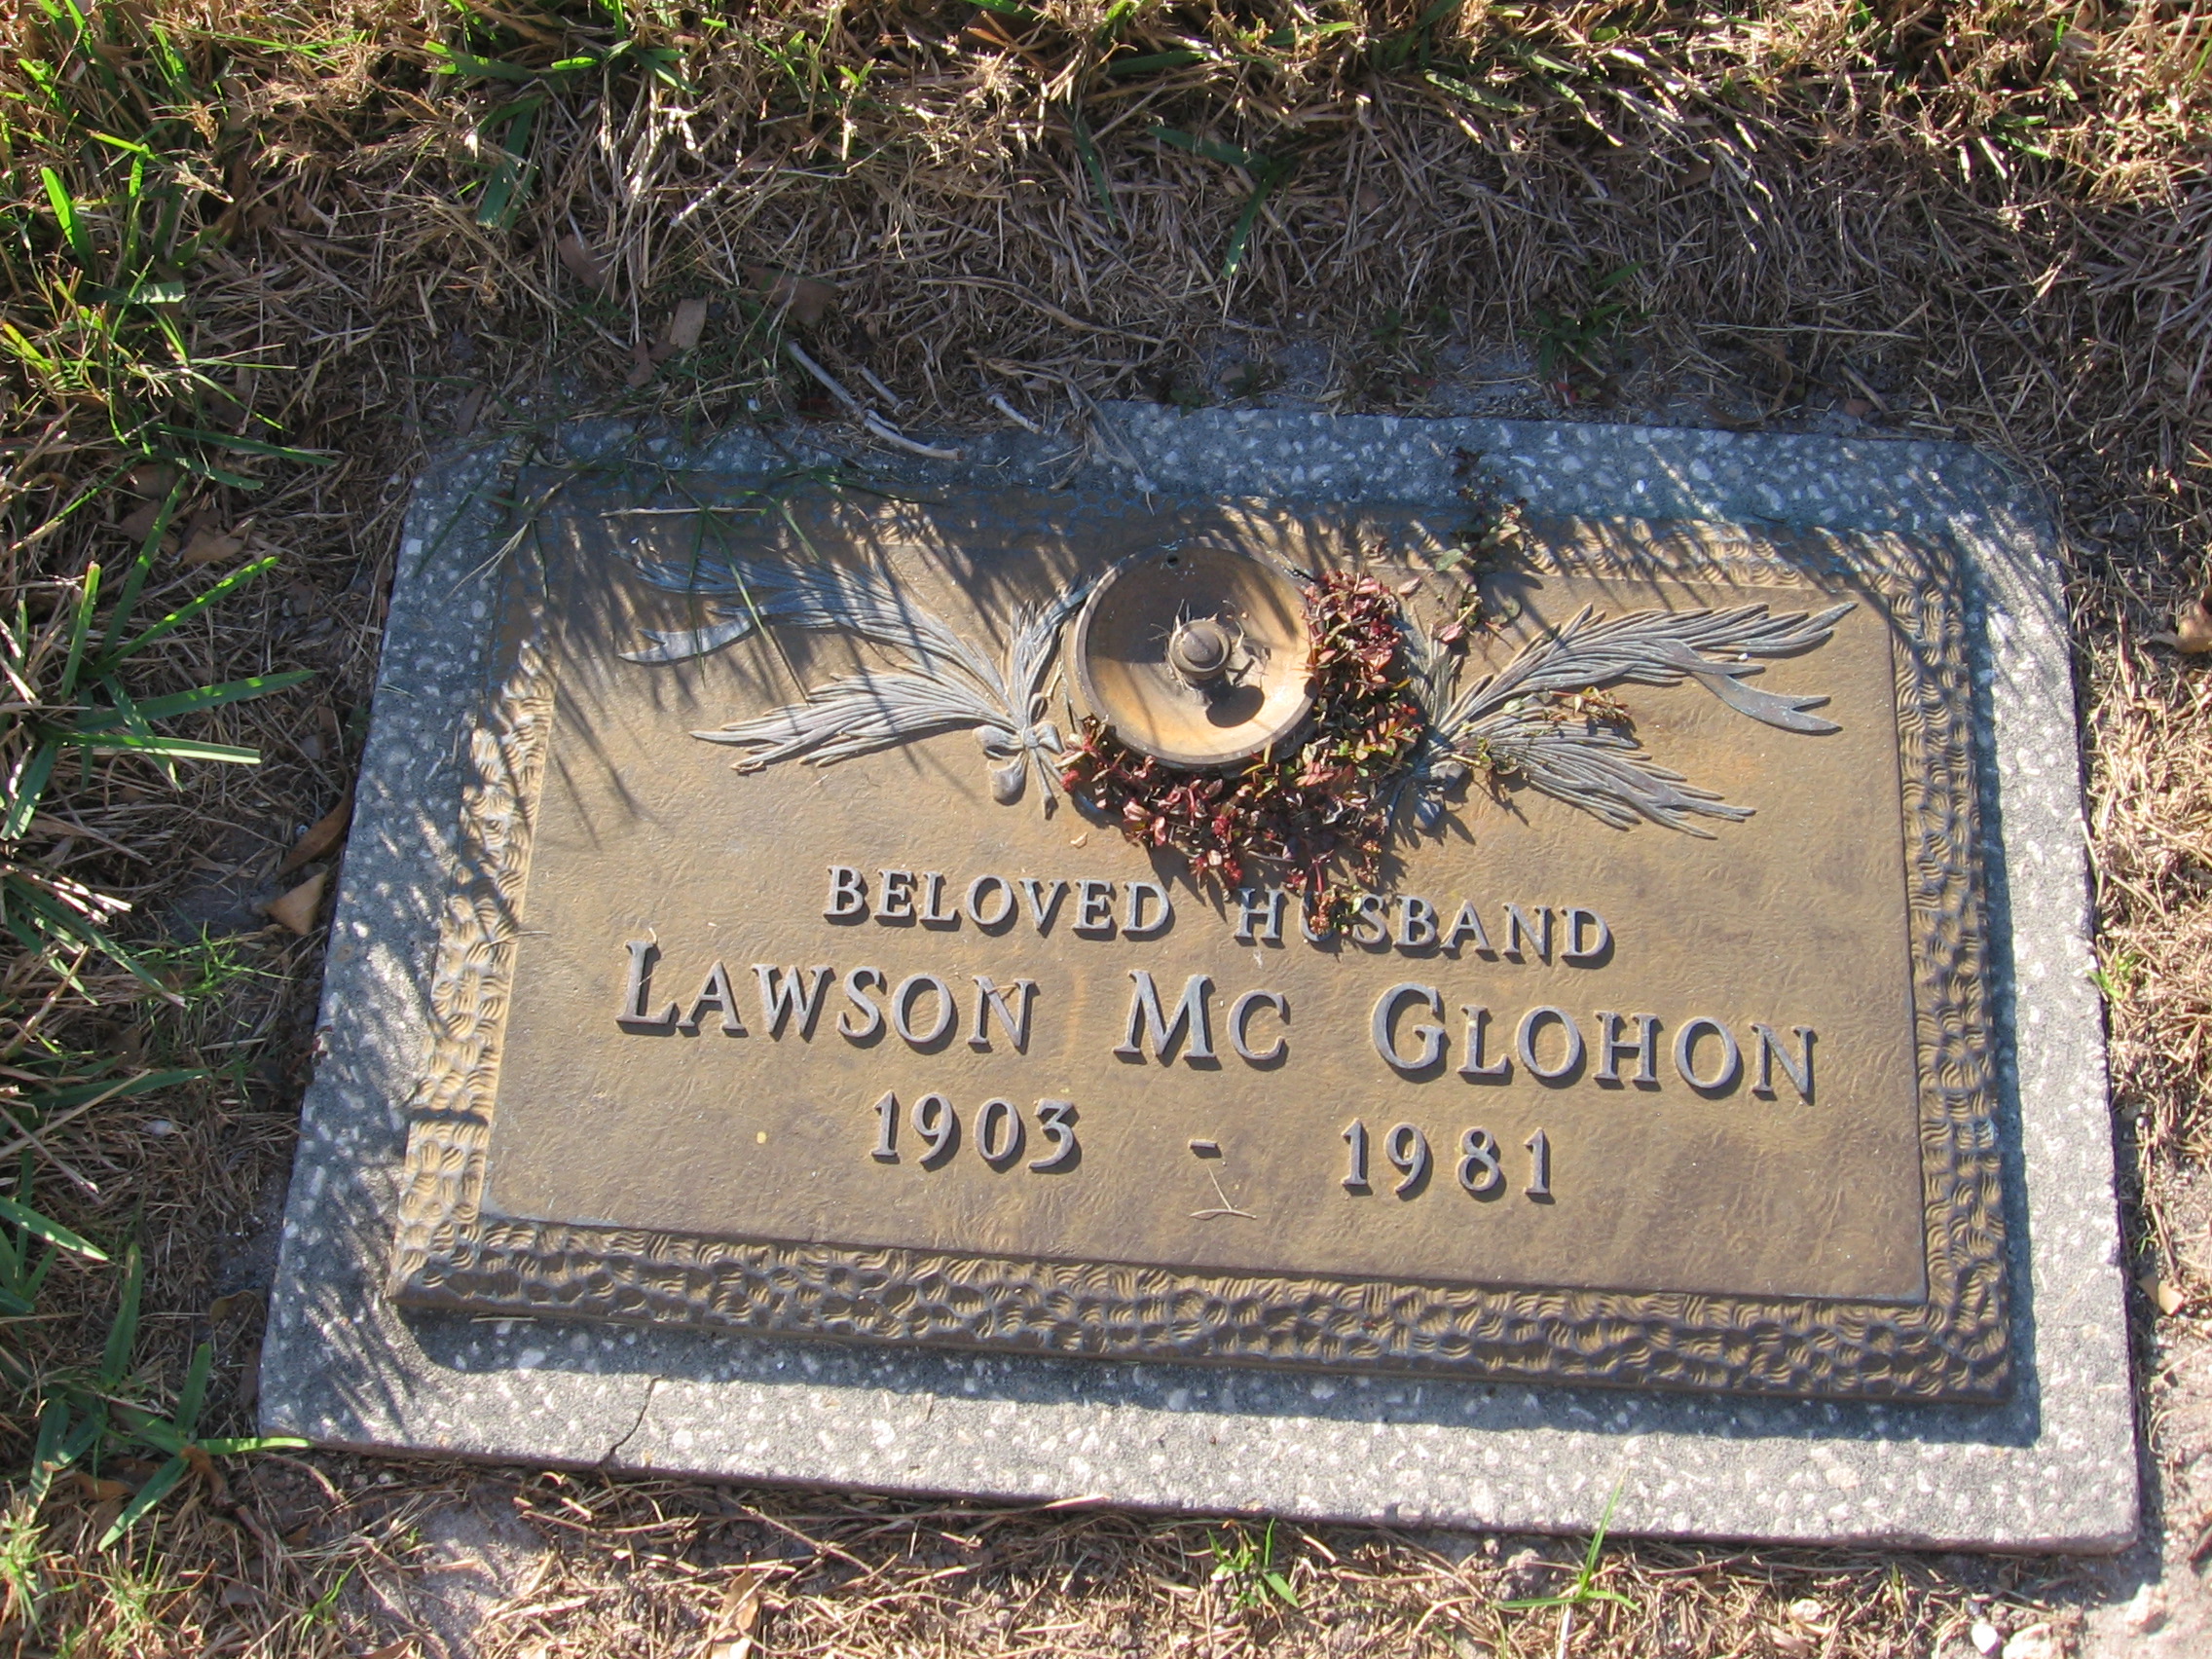 Lawson McGlohon